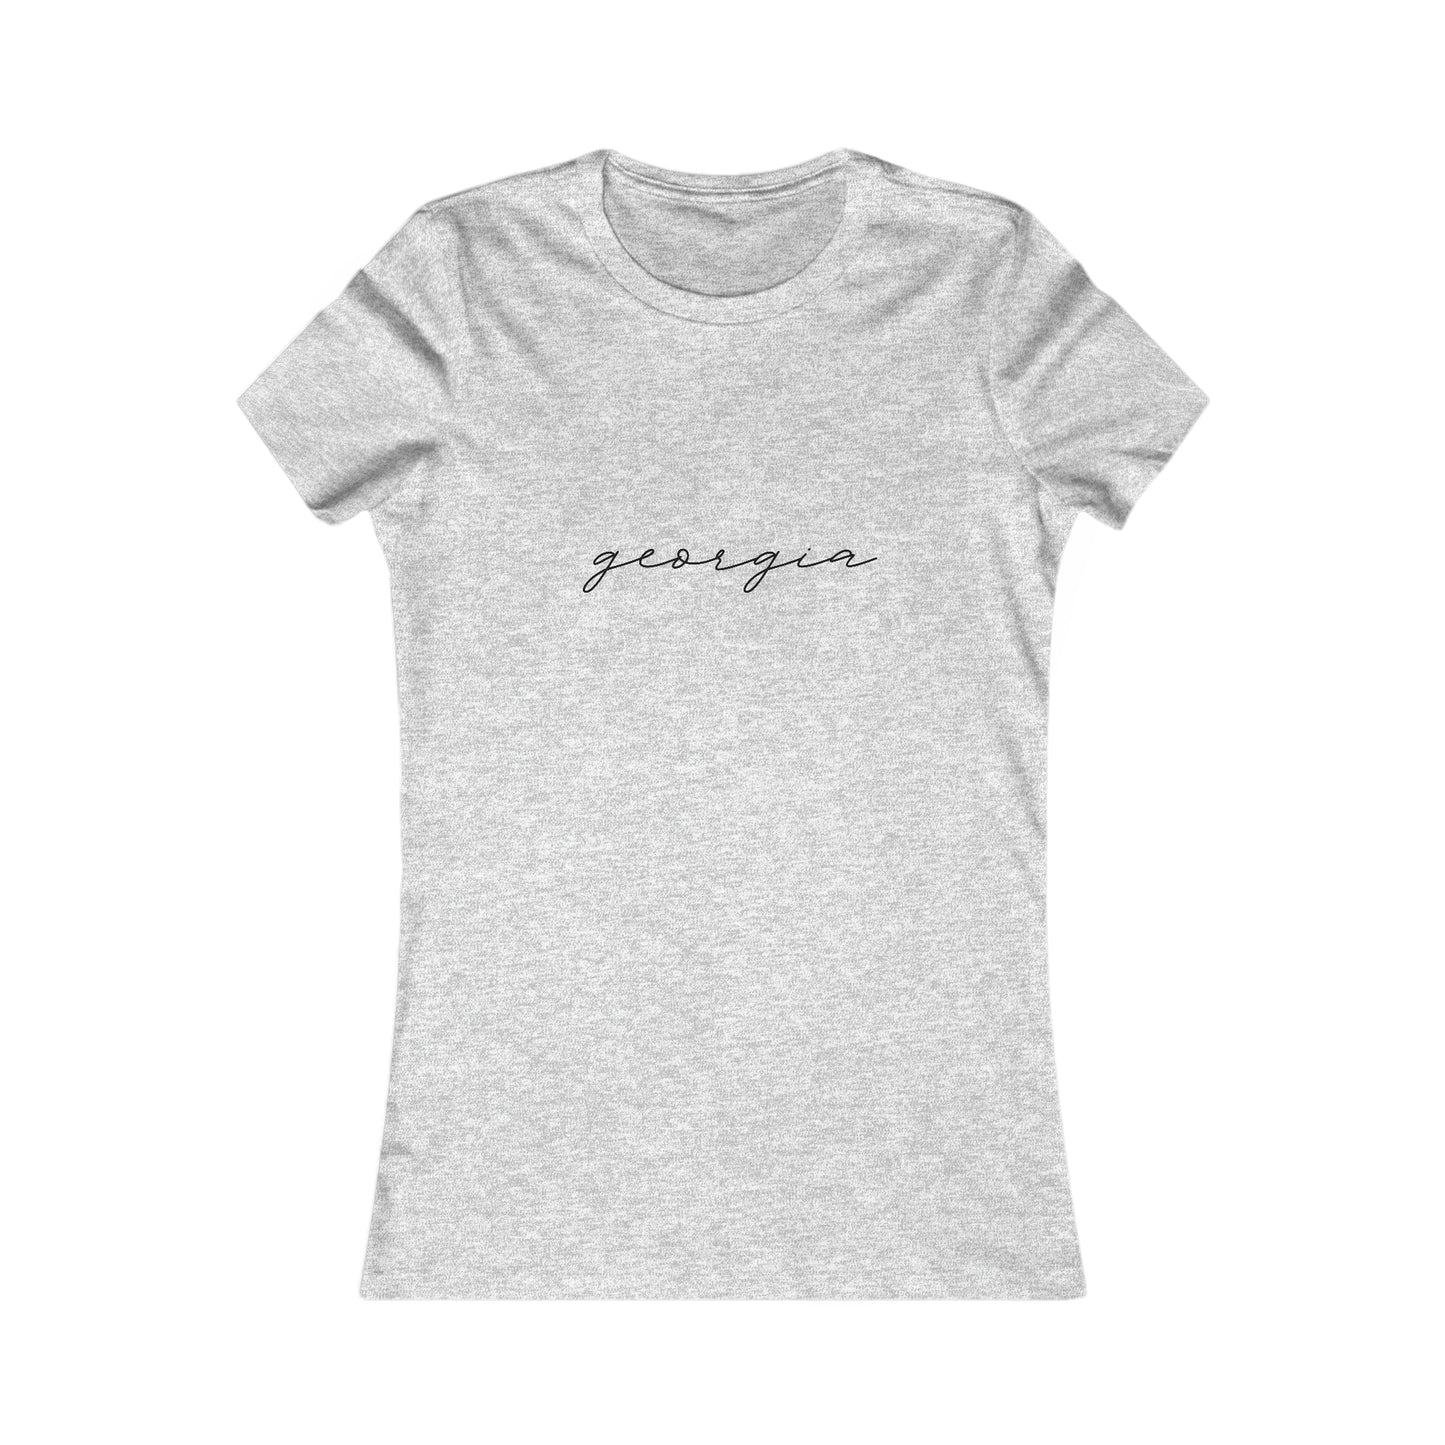 Georgia Cursive Women's Shirt